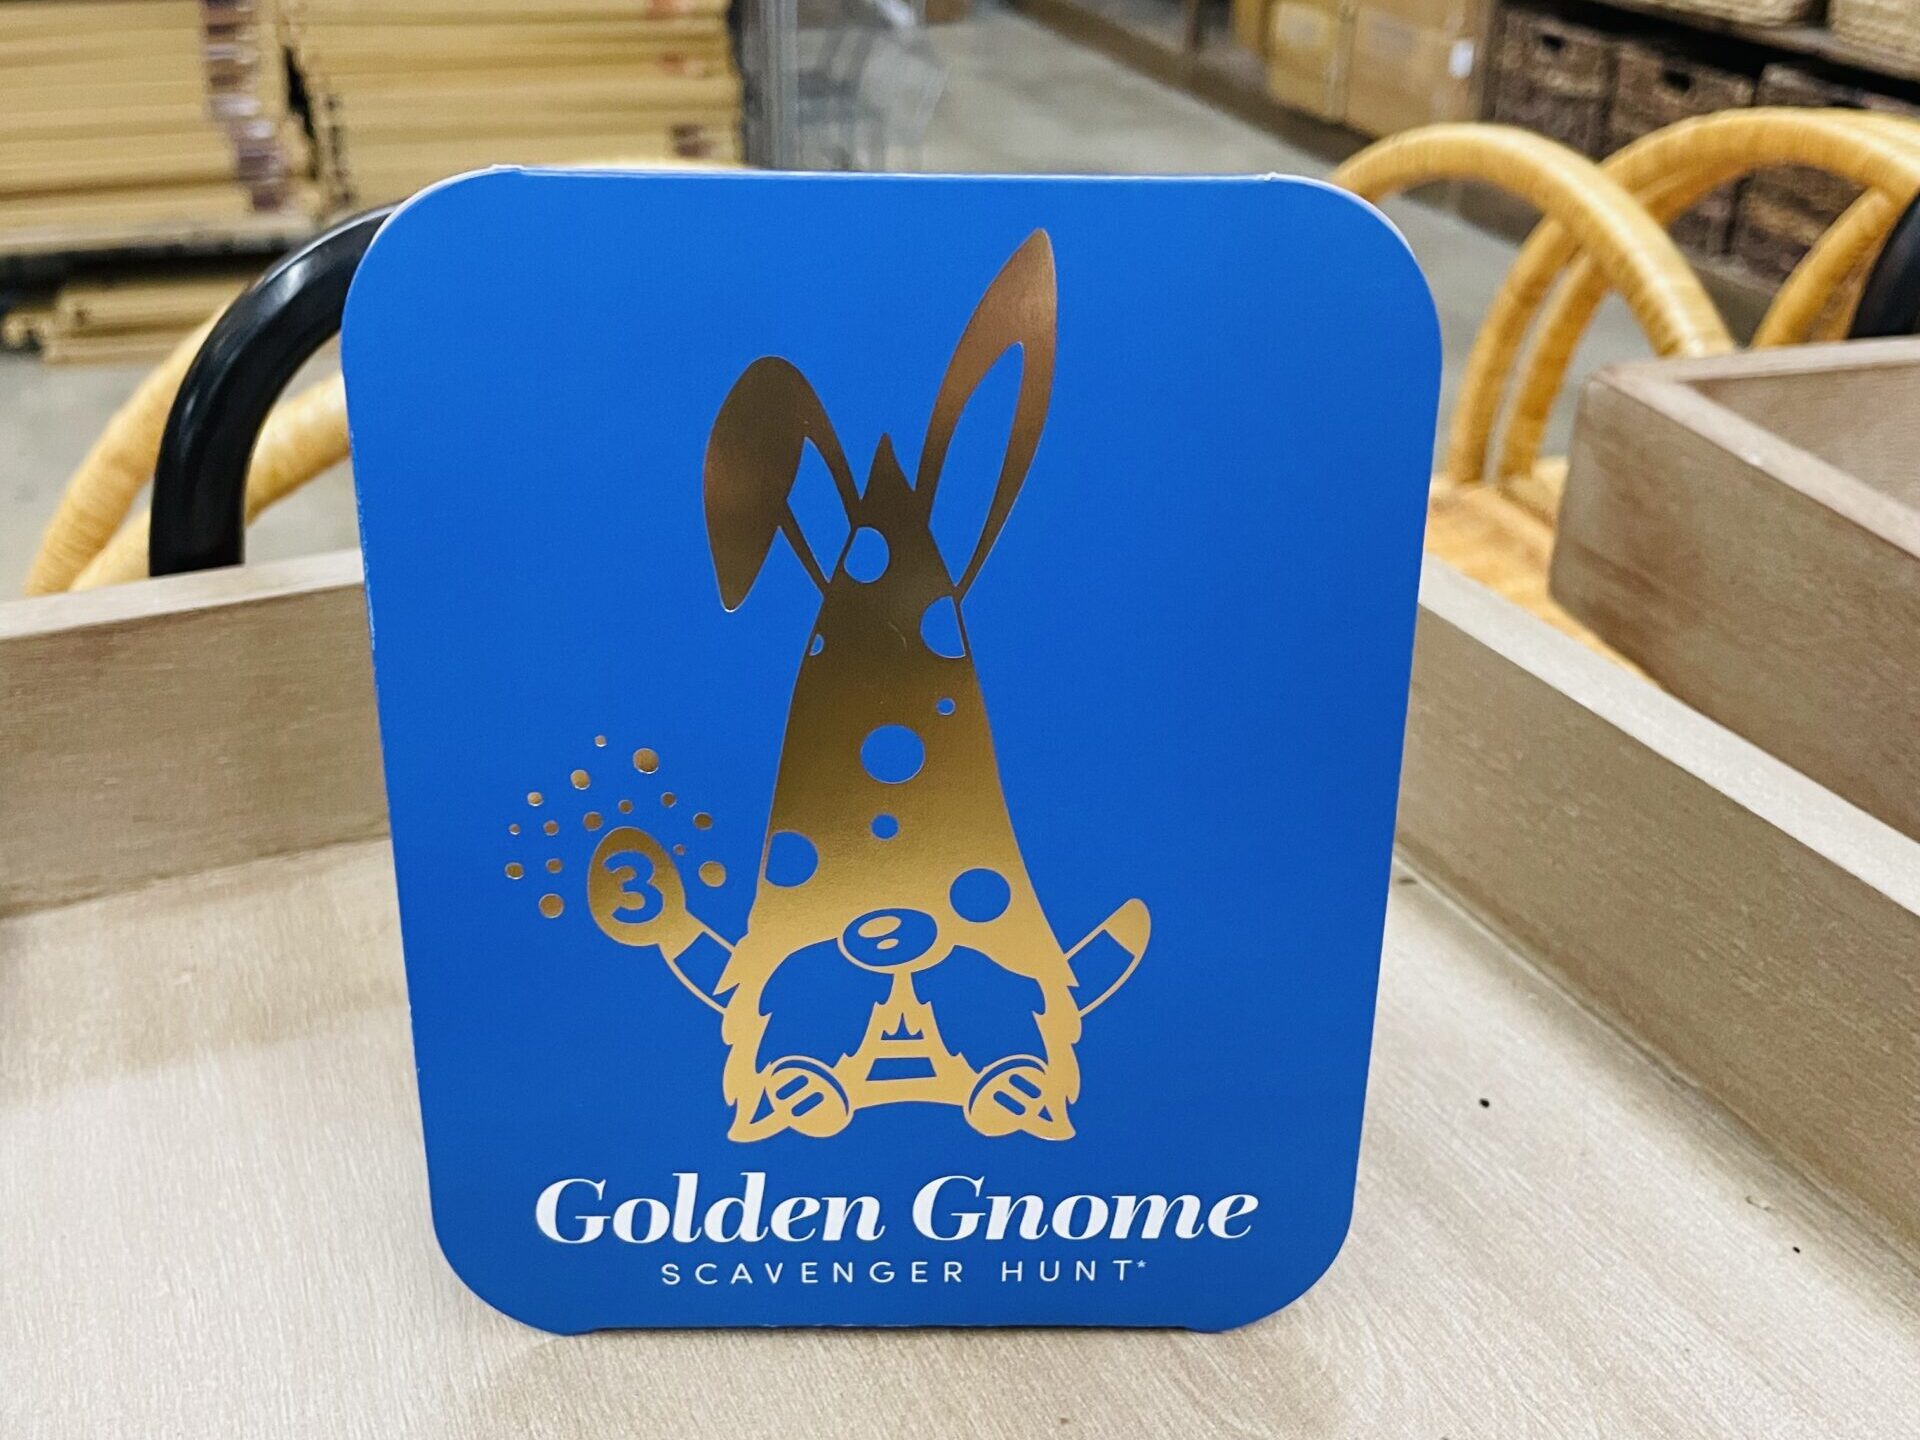 World Market's Golden Gnome Scavenger Hunt offers rewards of up to 100